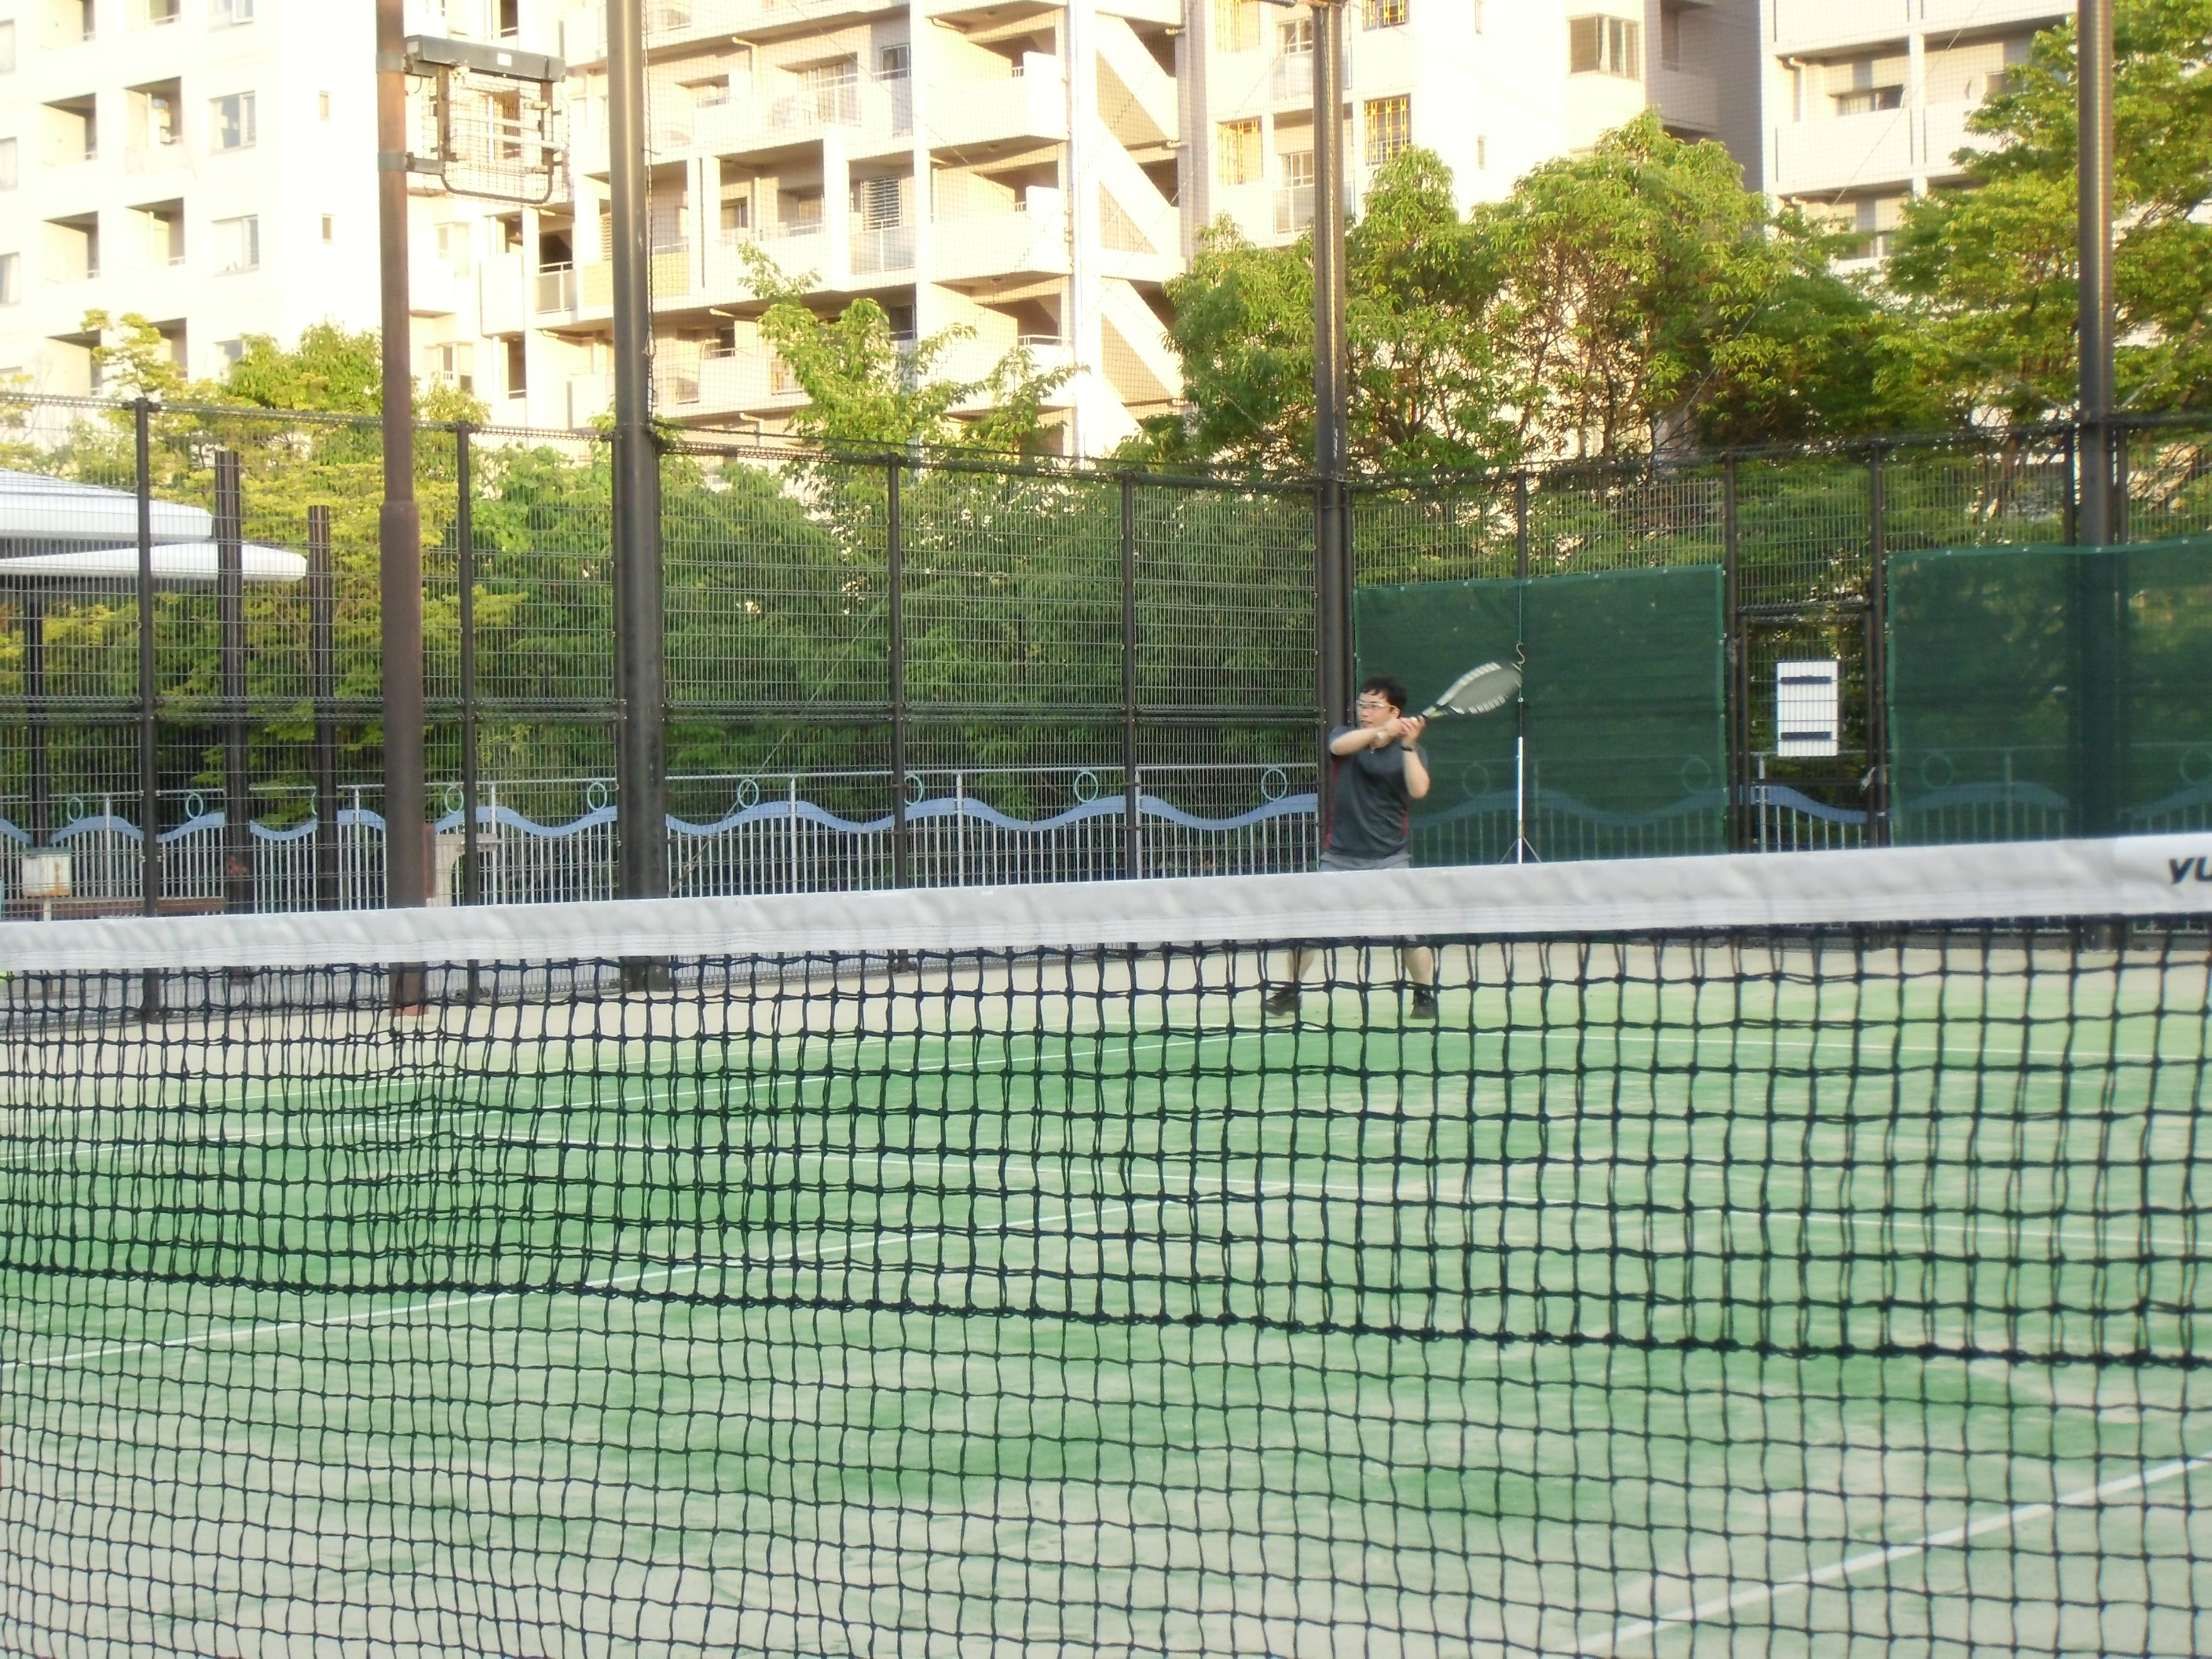 2013 tennis1-13